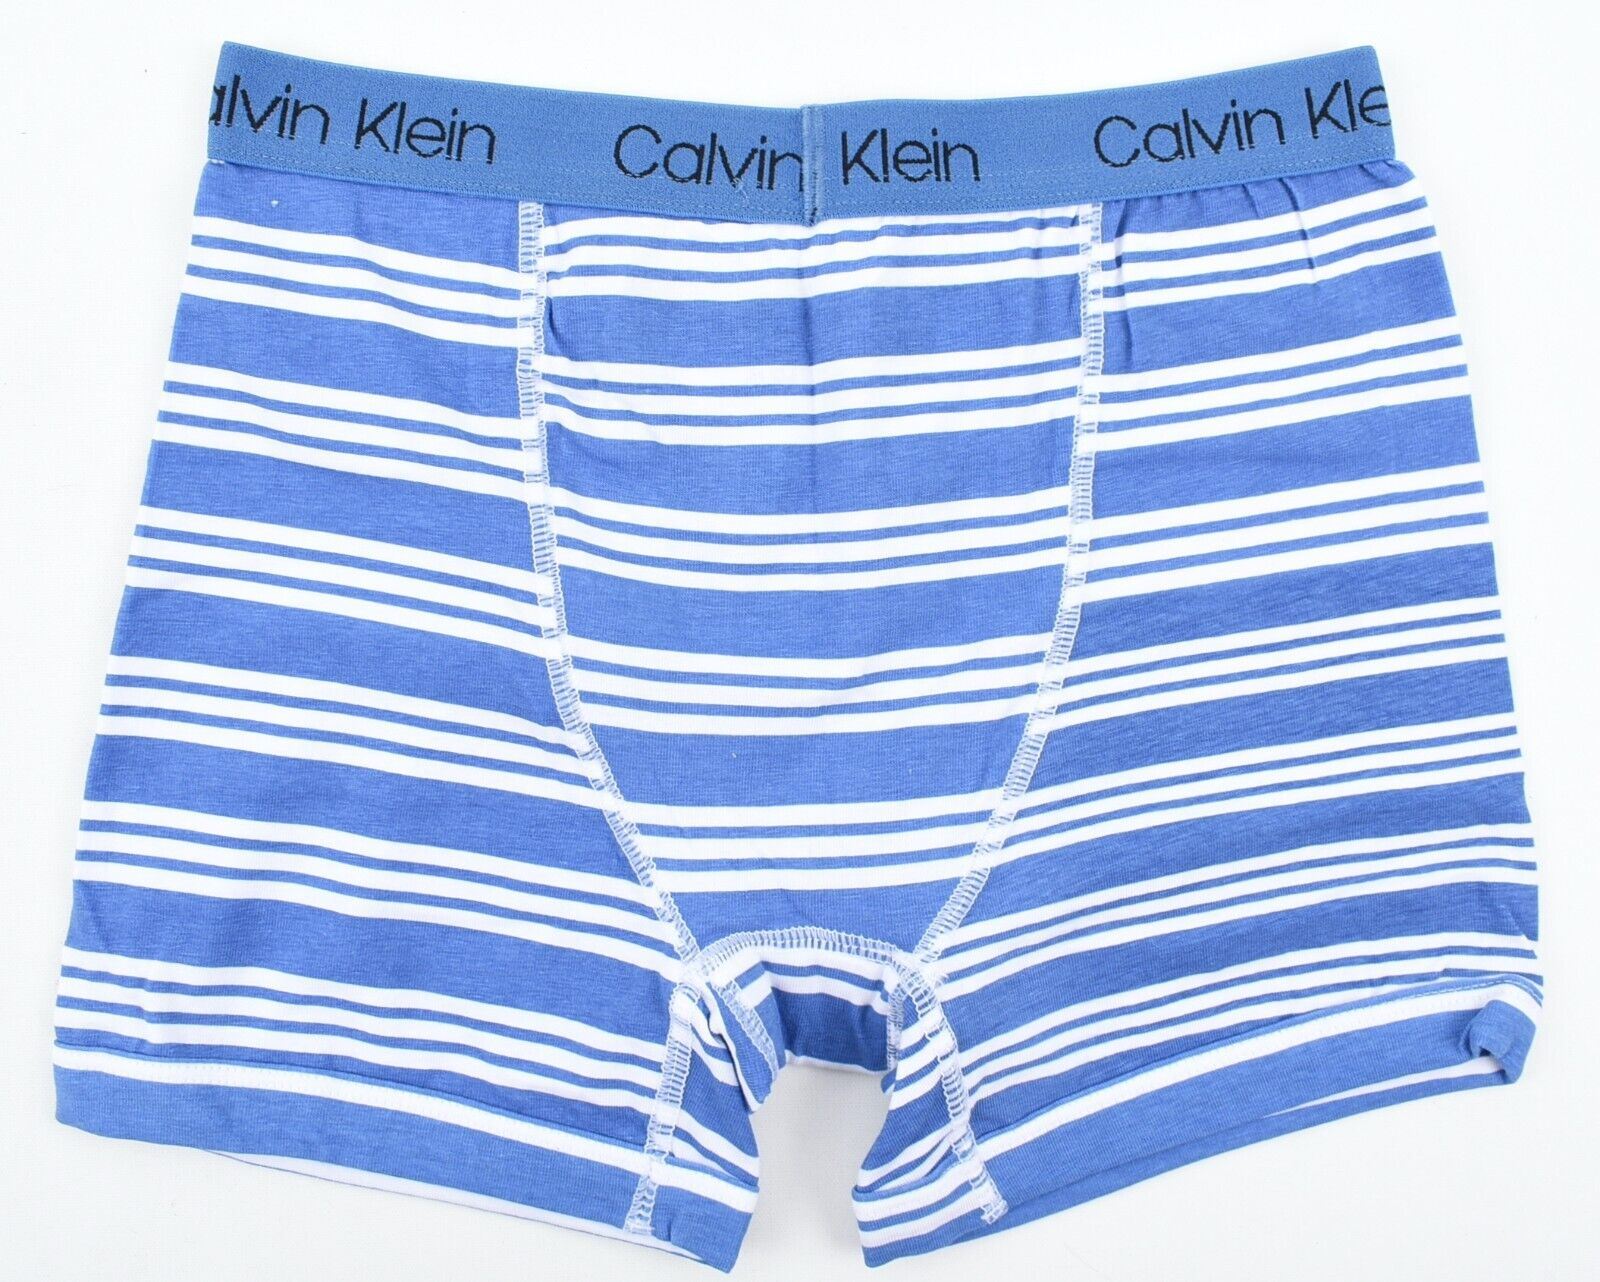 CALVIN KLEIN Boys Cotton Boxer Brief, Blue Striped, Single Pack, size 8-10 years